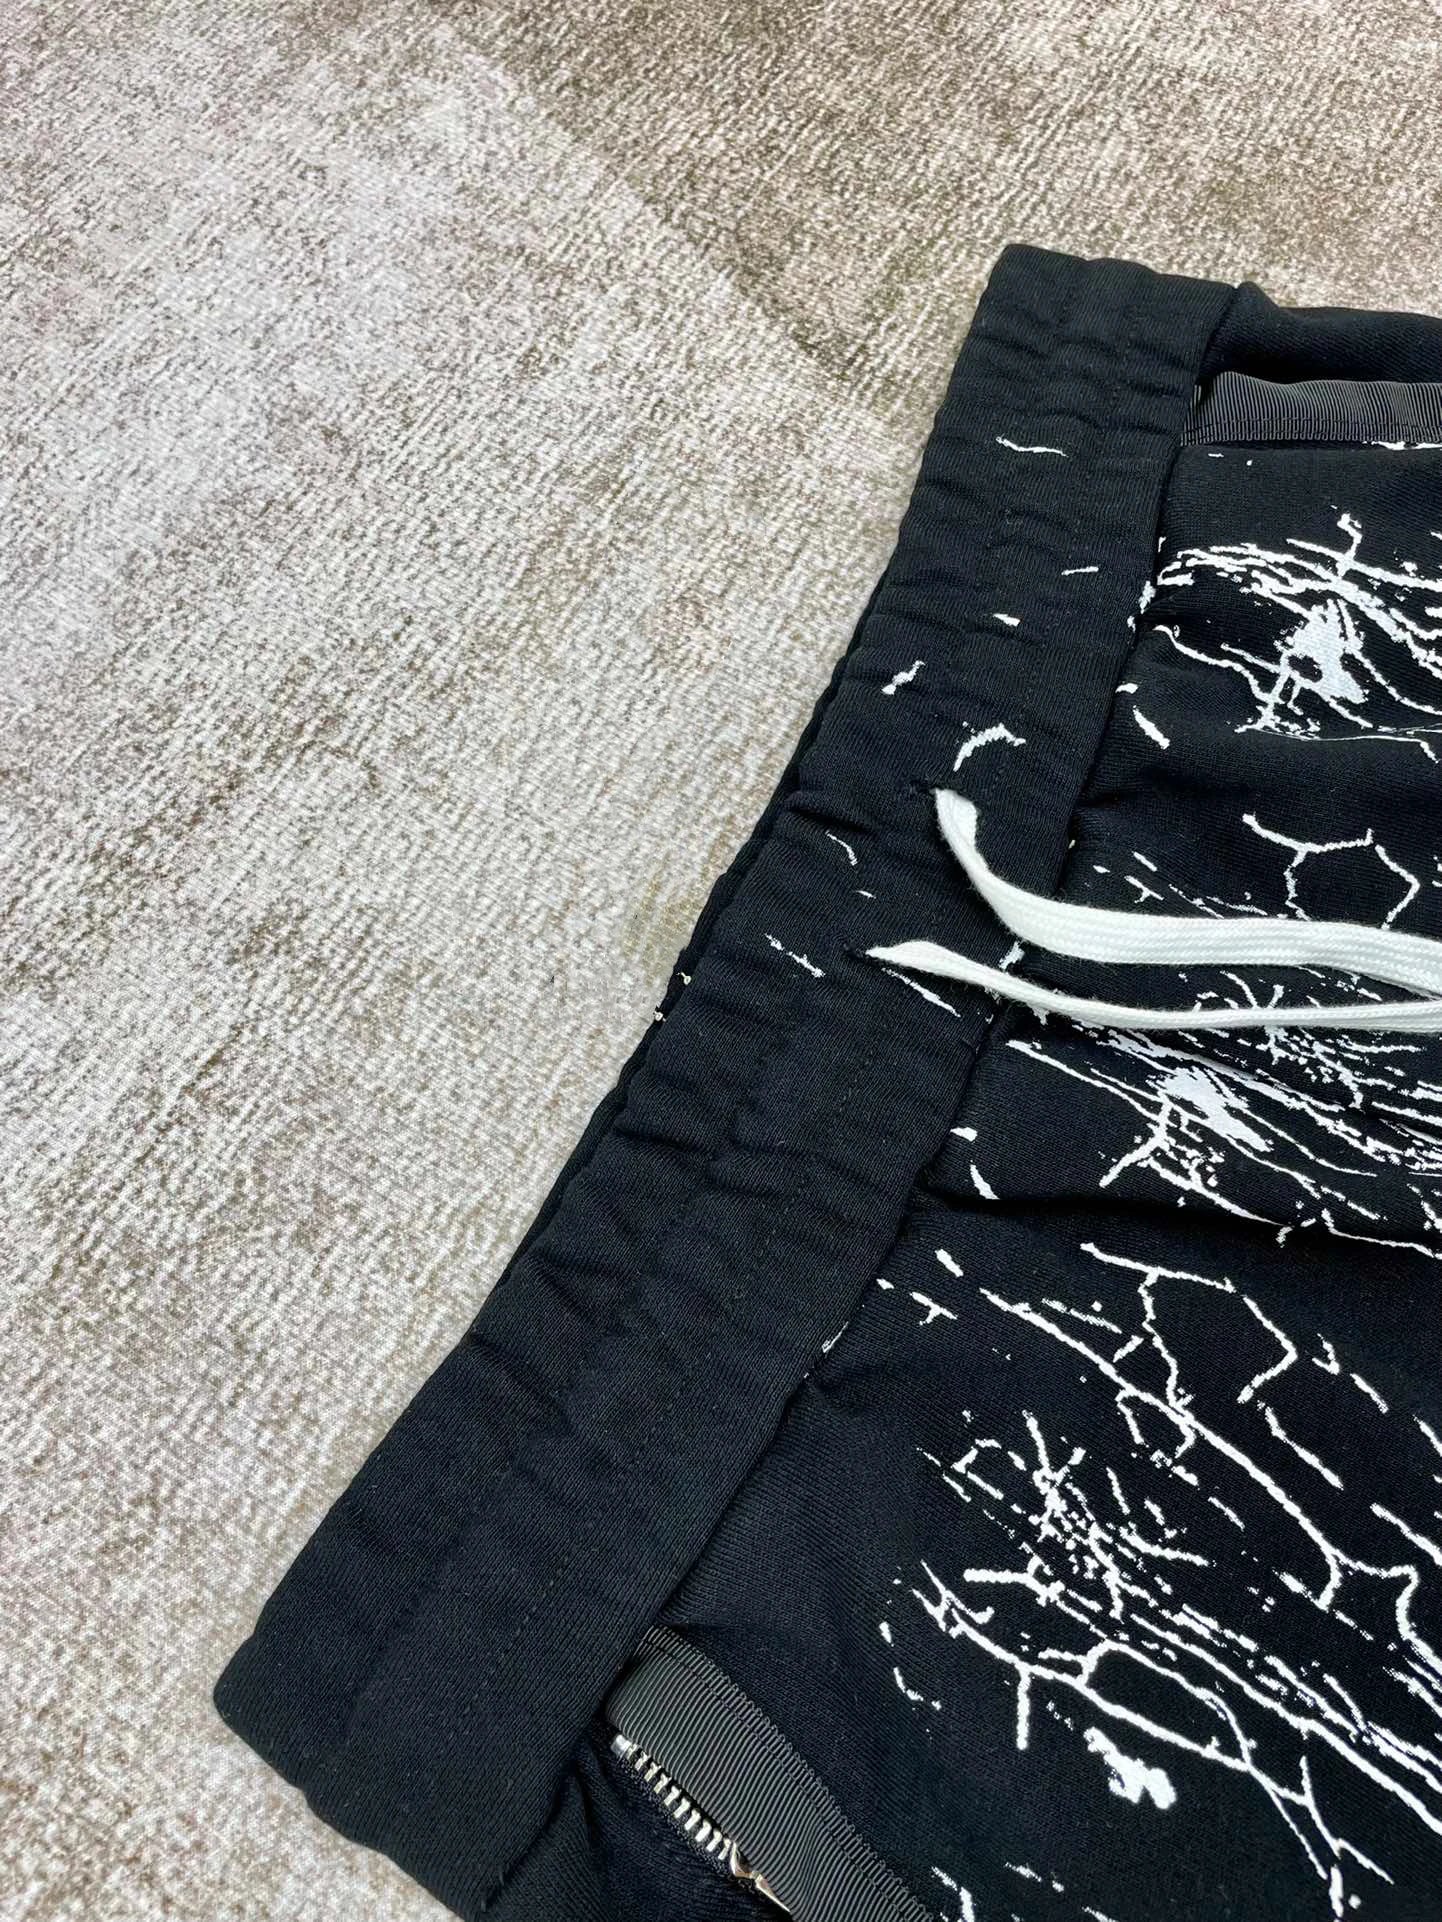 LUXMAN Drawstring Cotton Terry Fabric Shorts LUXLIFE BRANDS